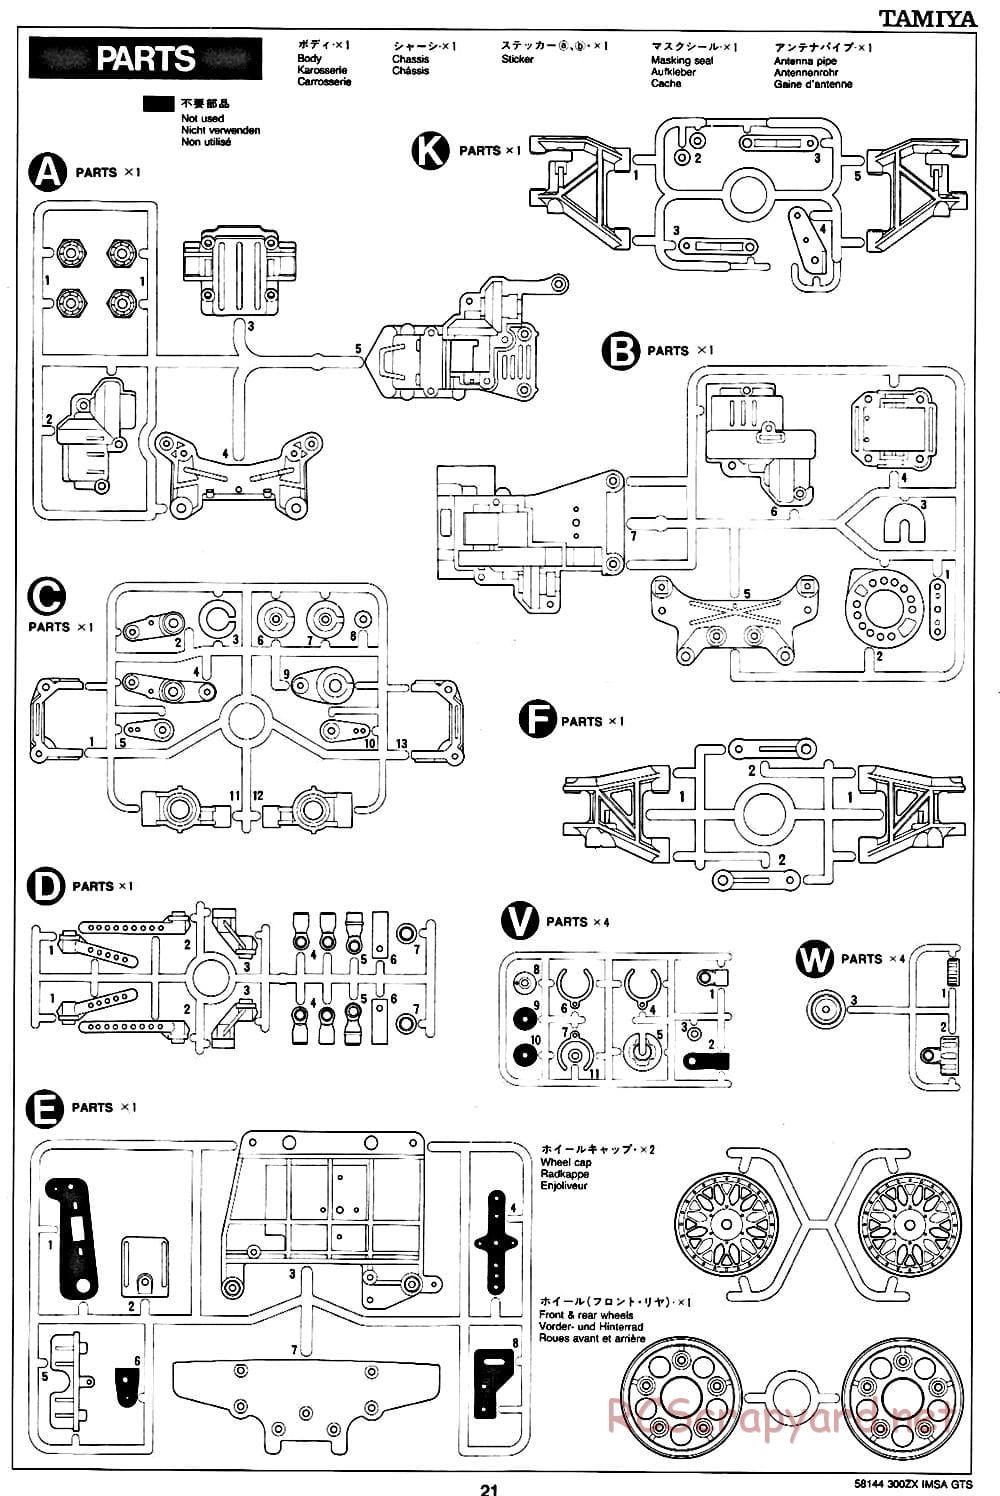 Tamiya - Nissan 300ZX IMSA-GTS - TA-02W Chassis - Manual - Page 21